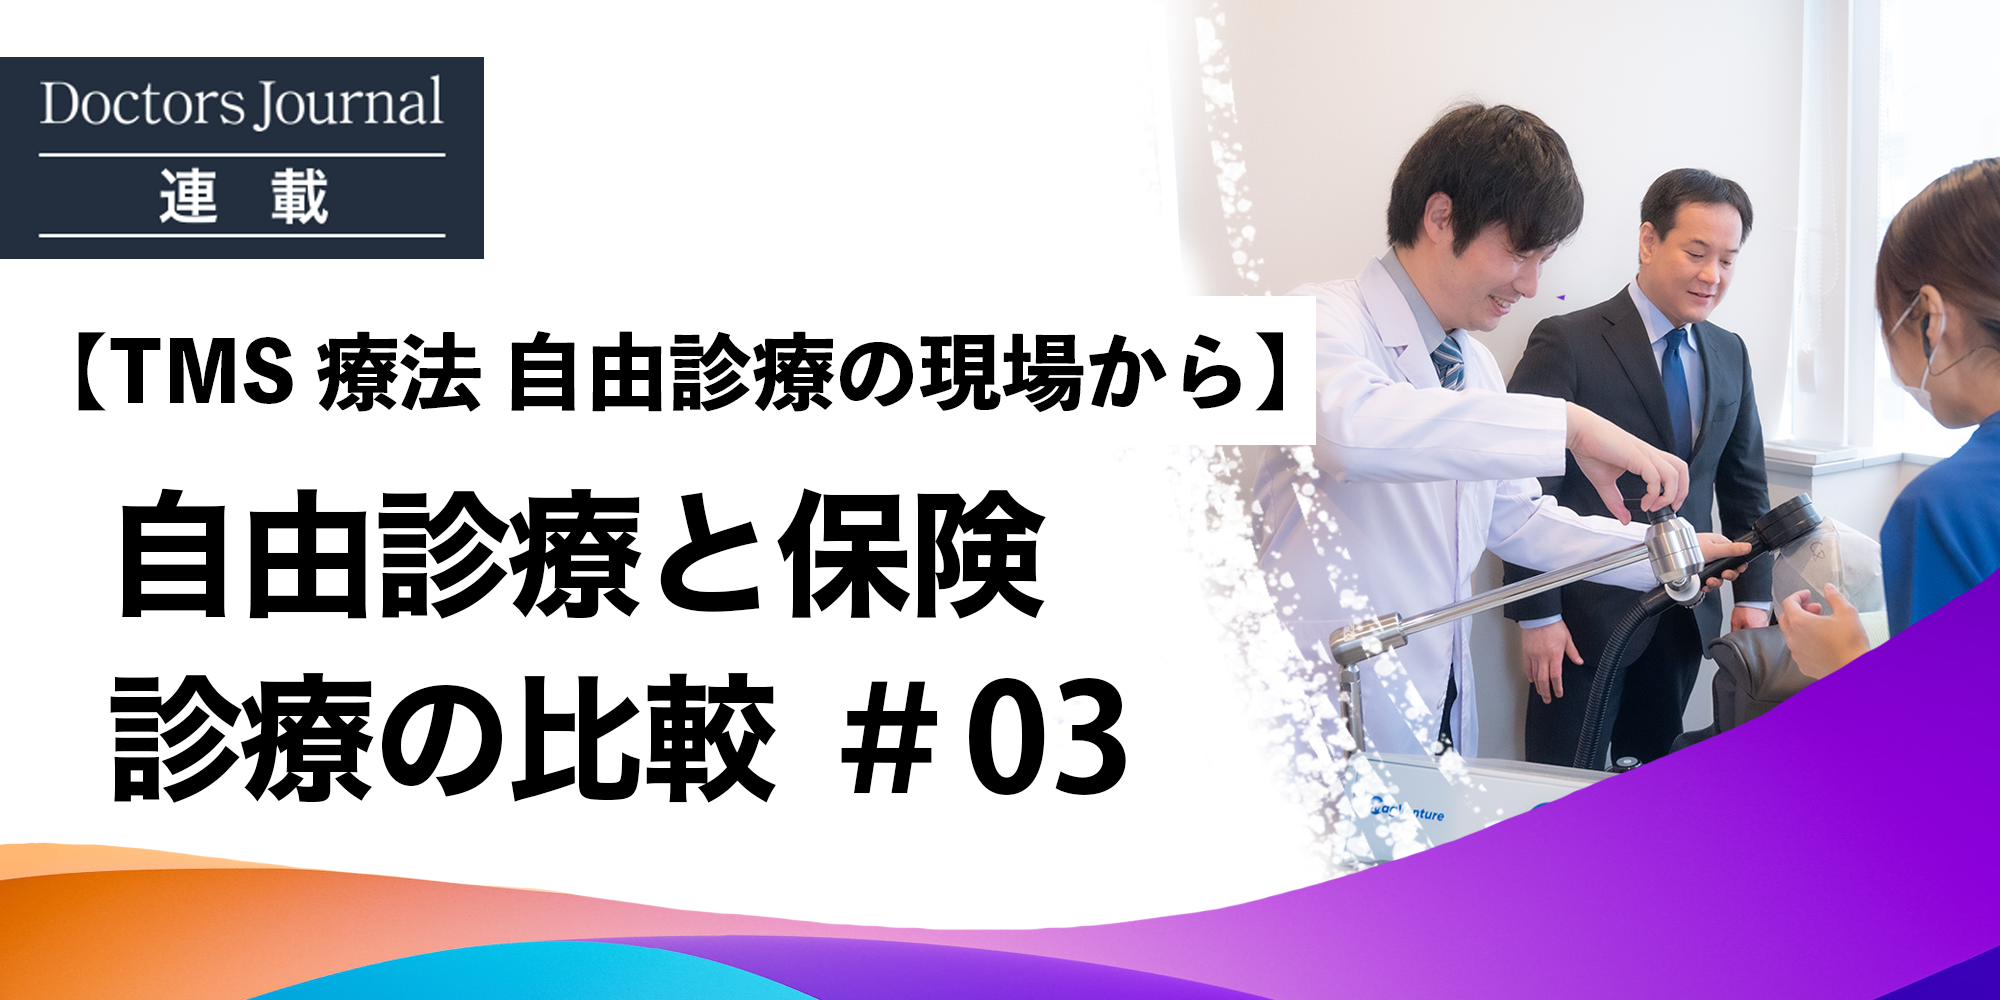 ohsawa-doctor-3